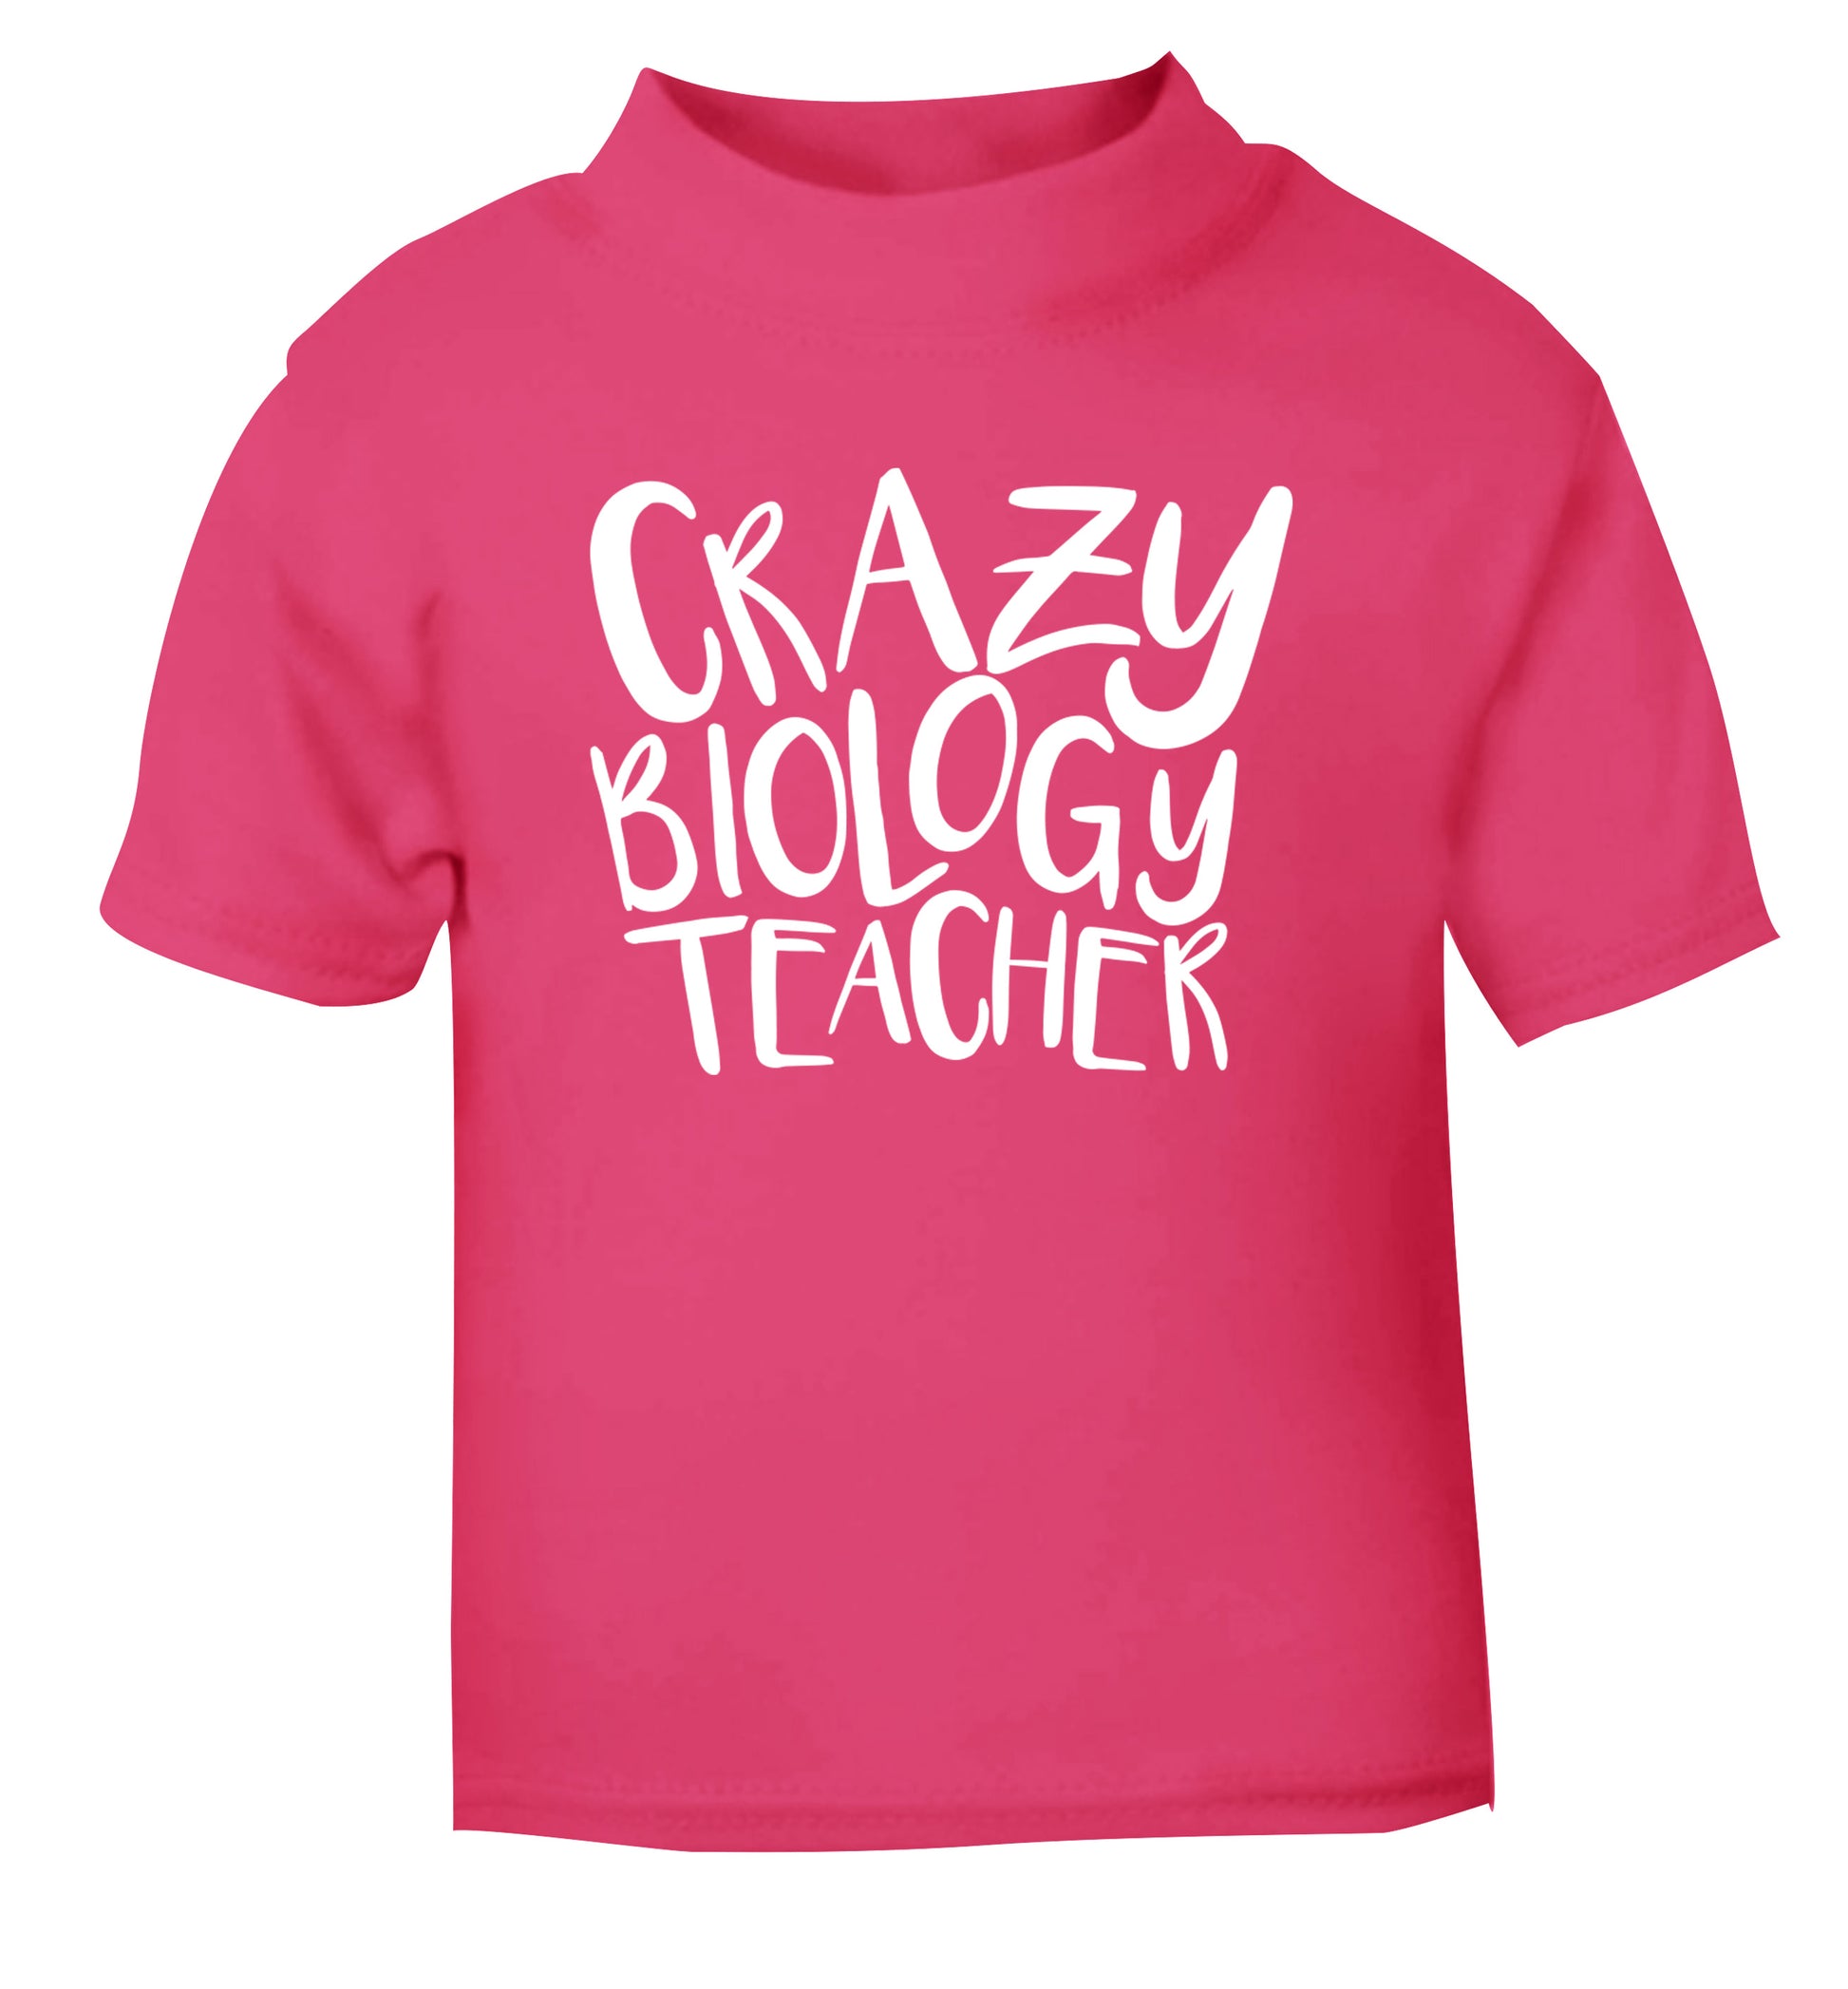 Crazy biology teacher pink Baby Toddler Tshirt 2 Years